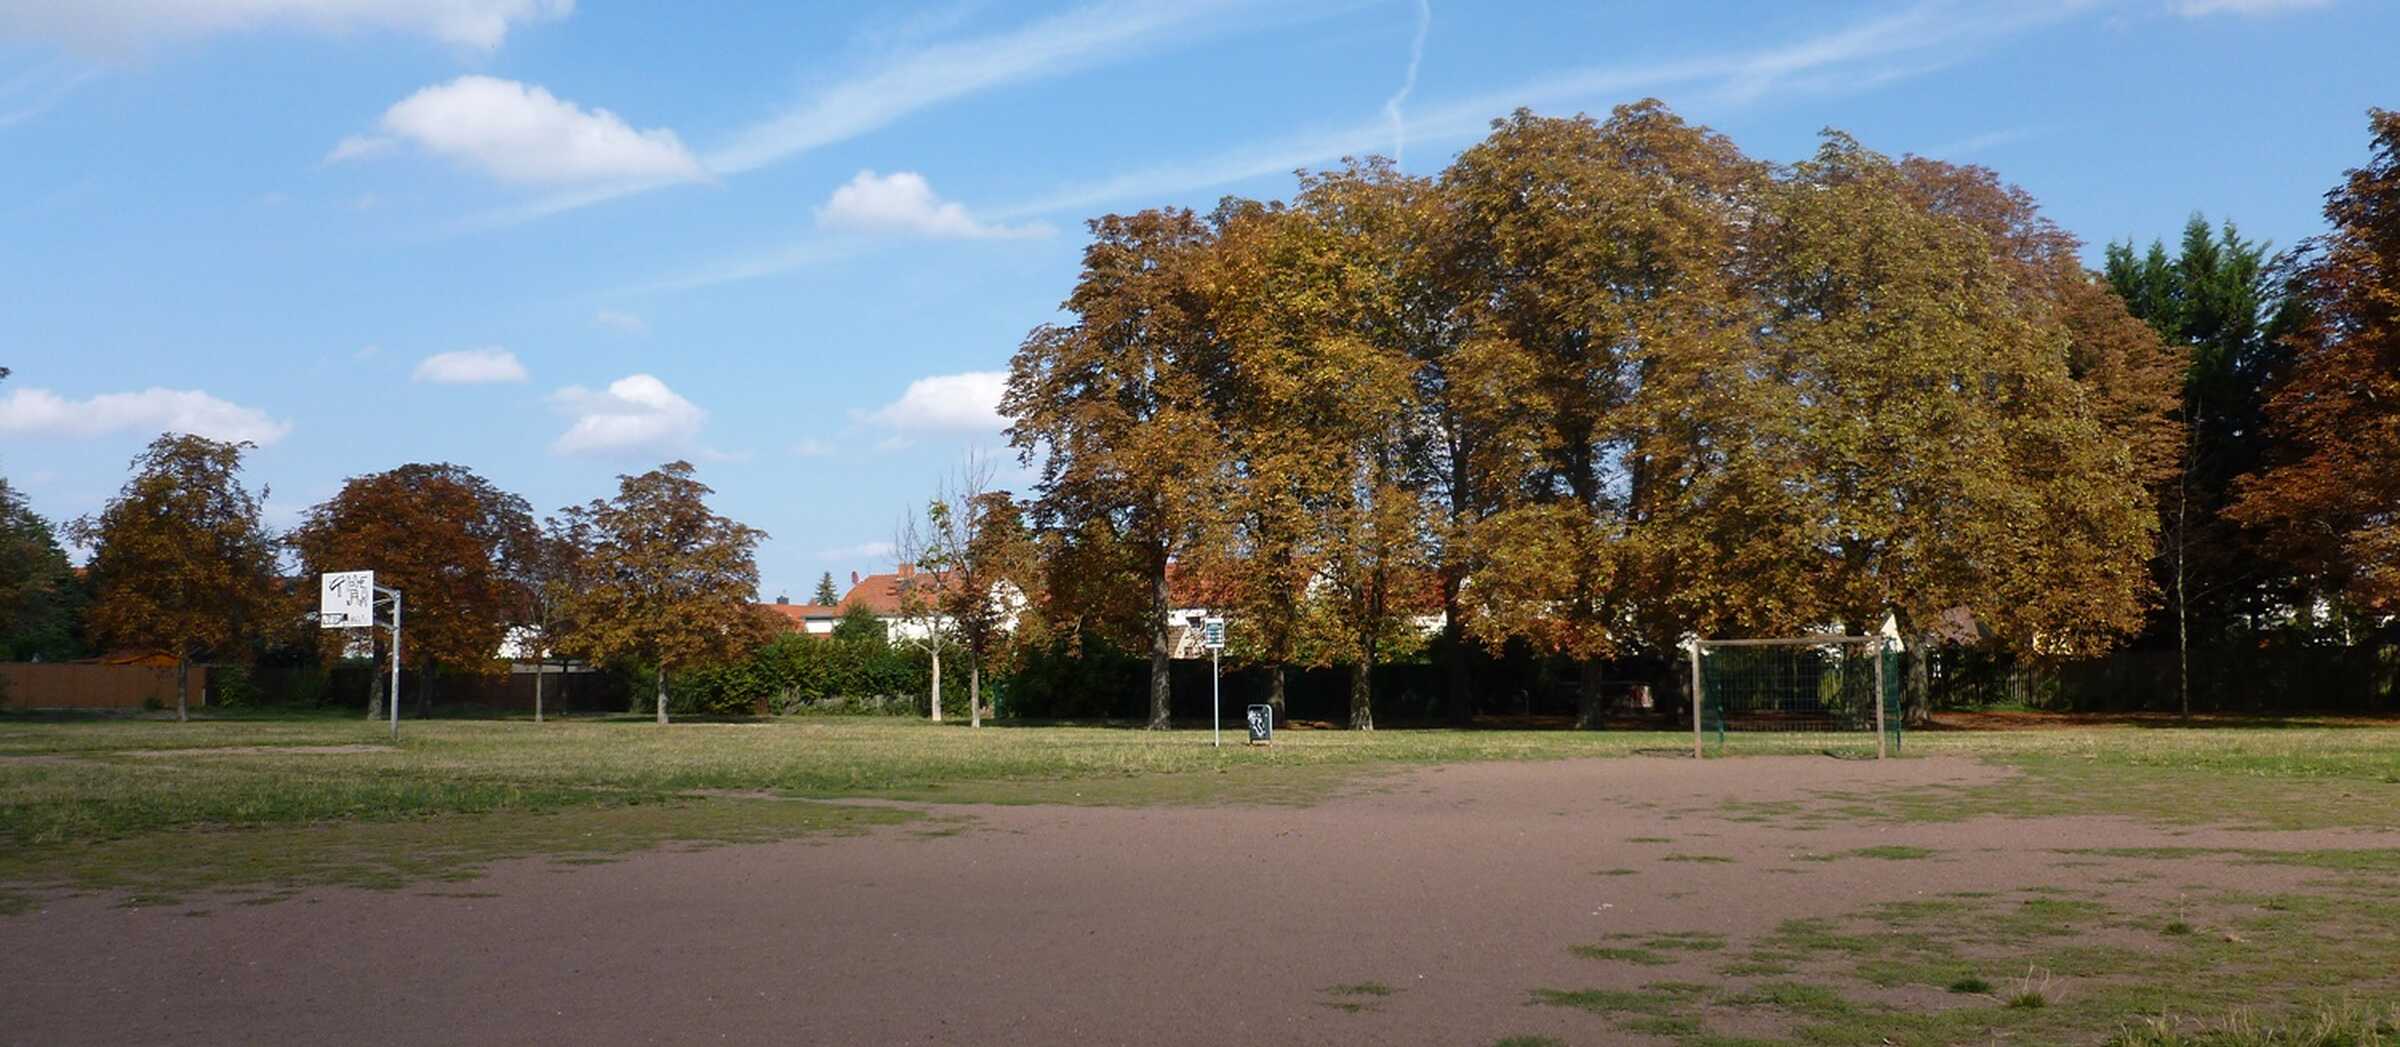 Bolz- und Basketballplatz Am Grünen Feld